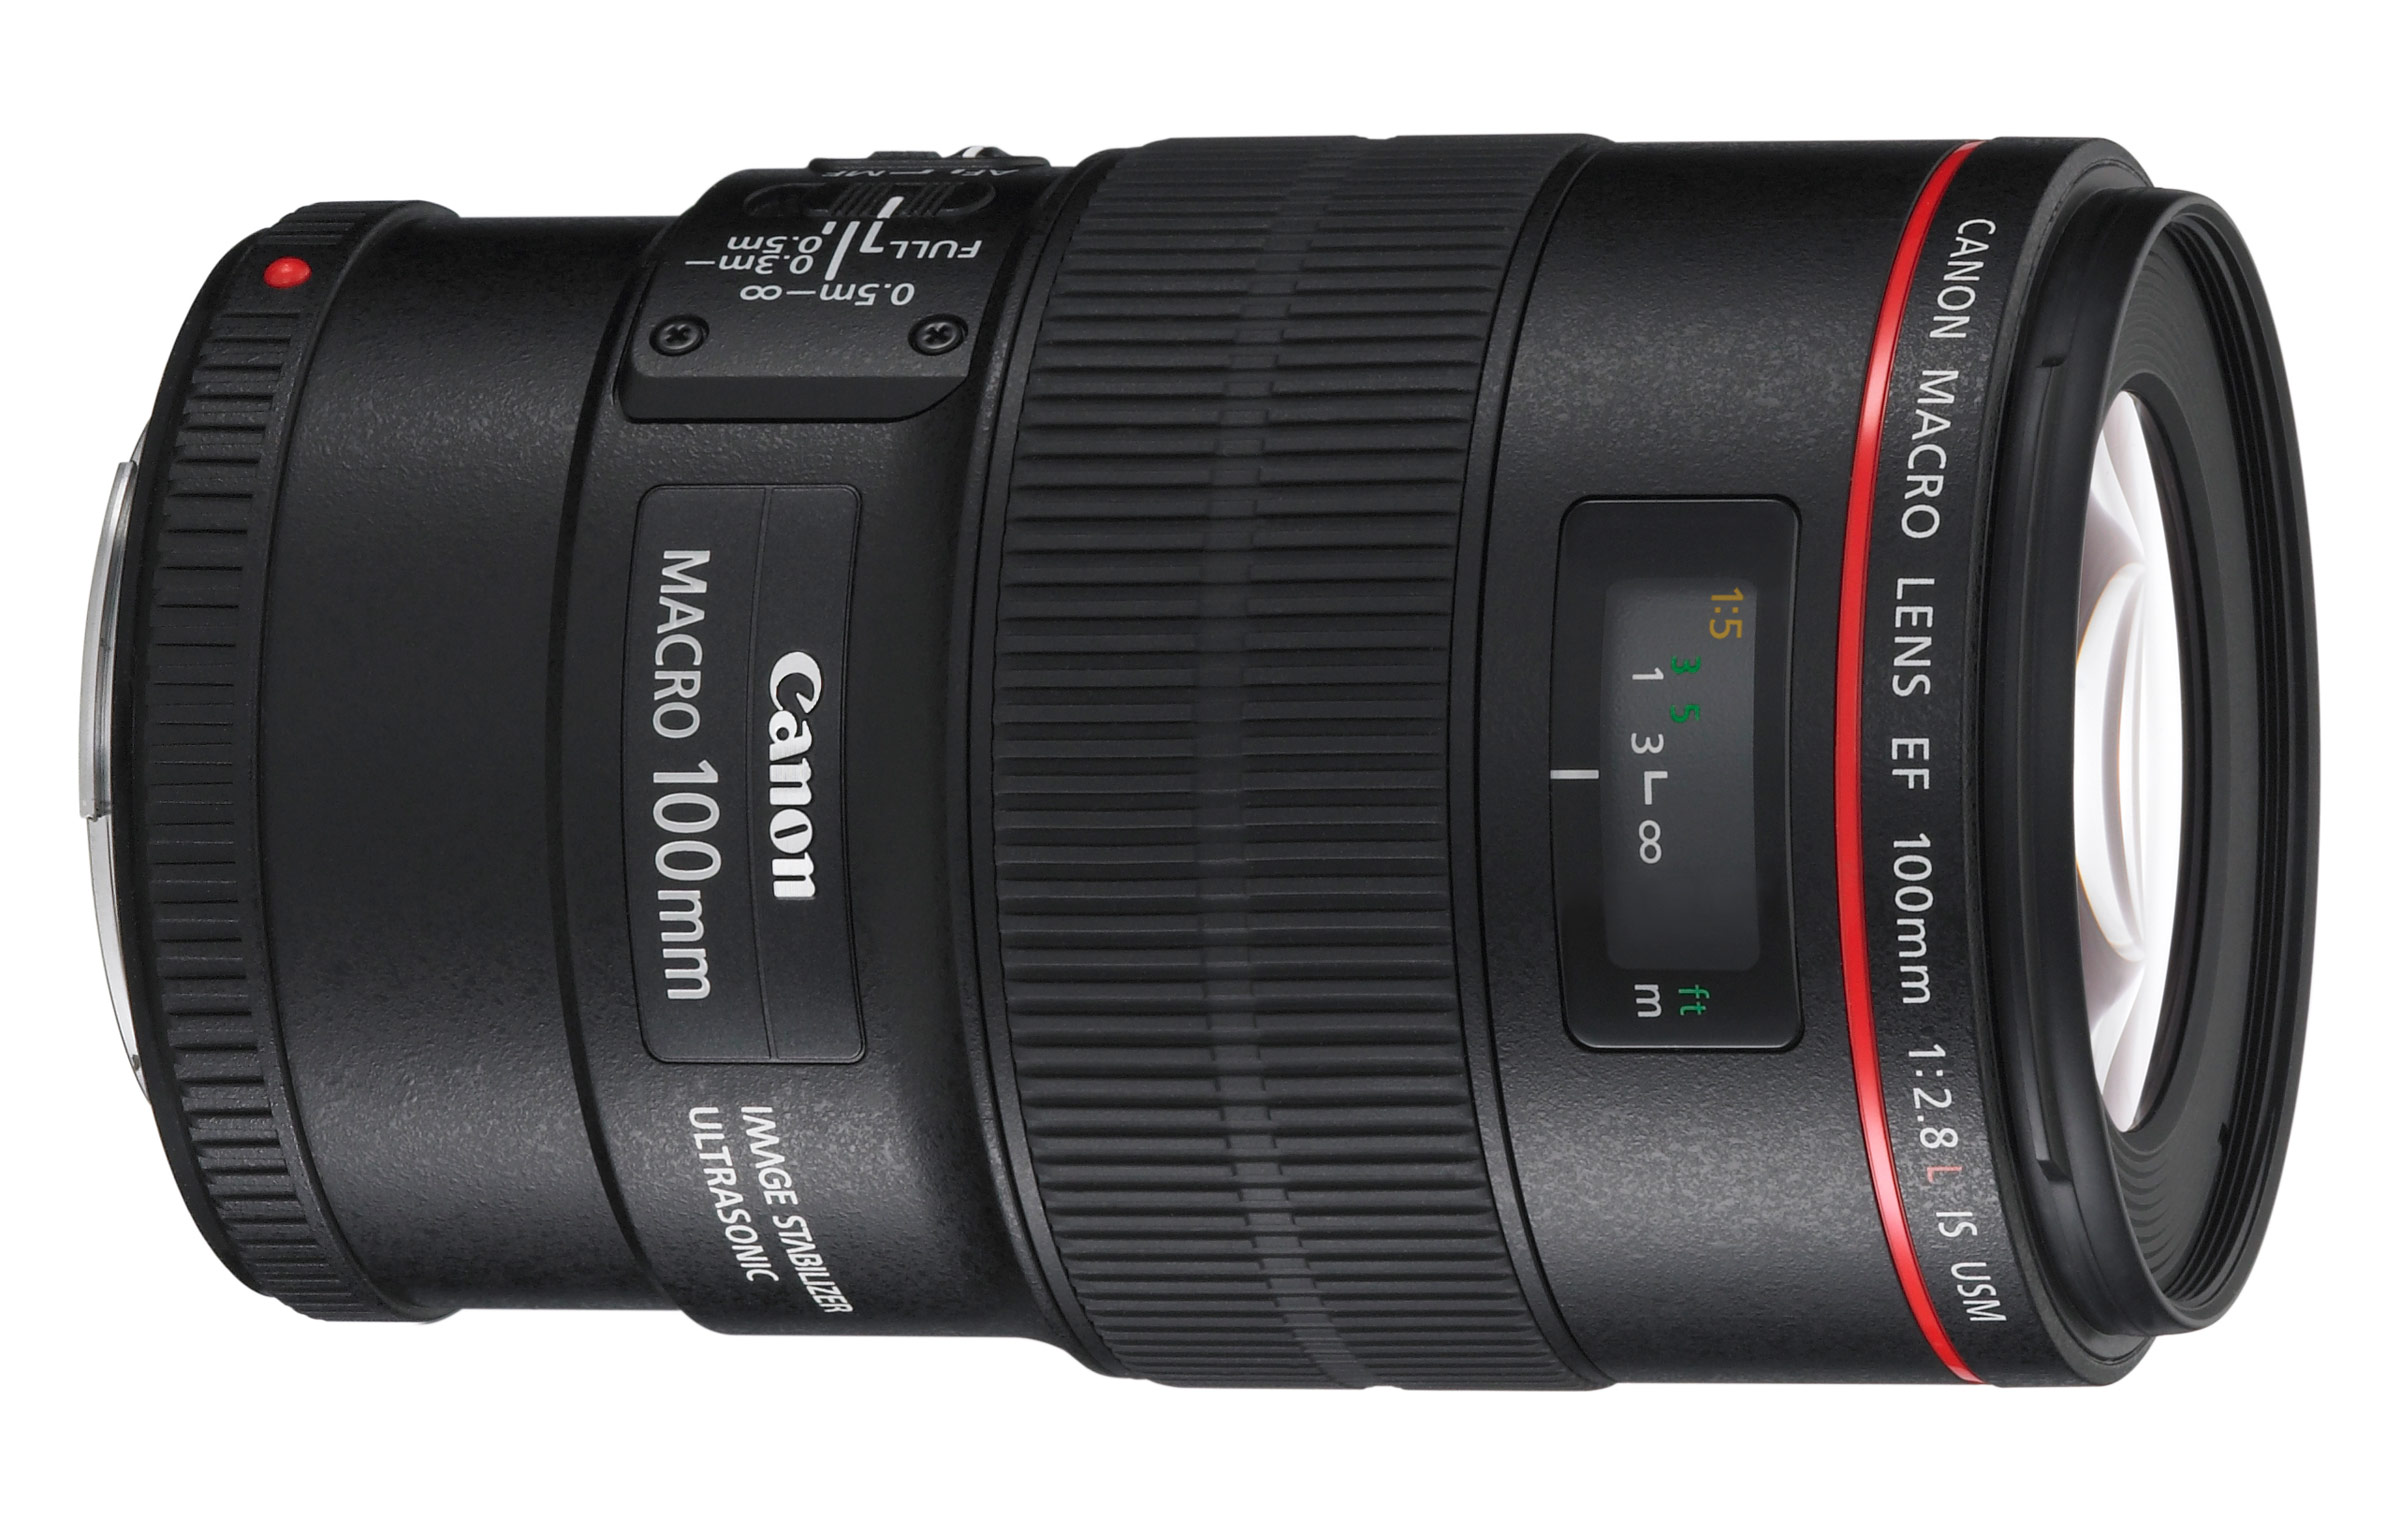 Canon EF 100mm f/2.8L Macro IS USM Lens Review | GearOpen